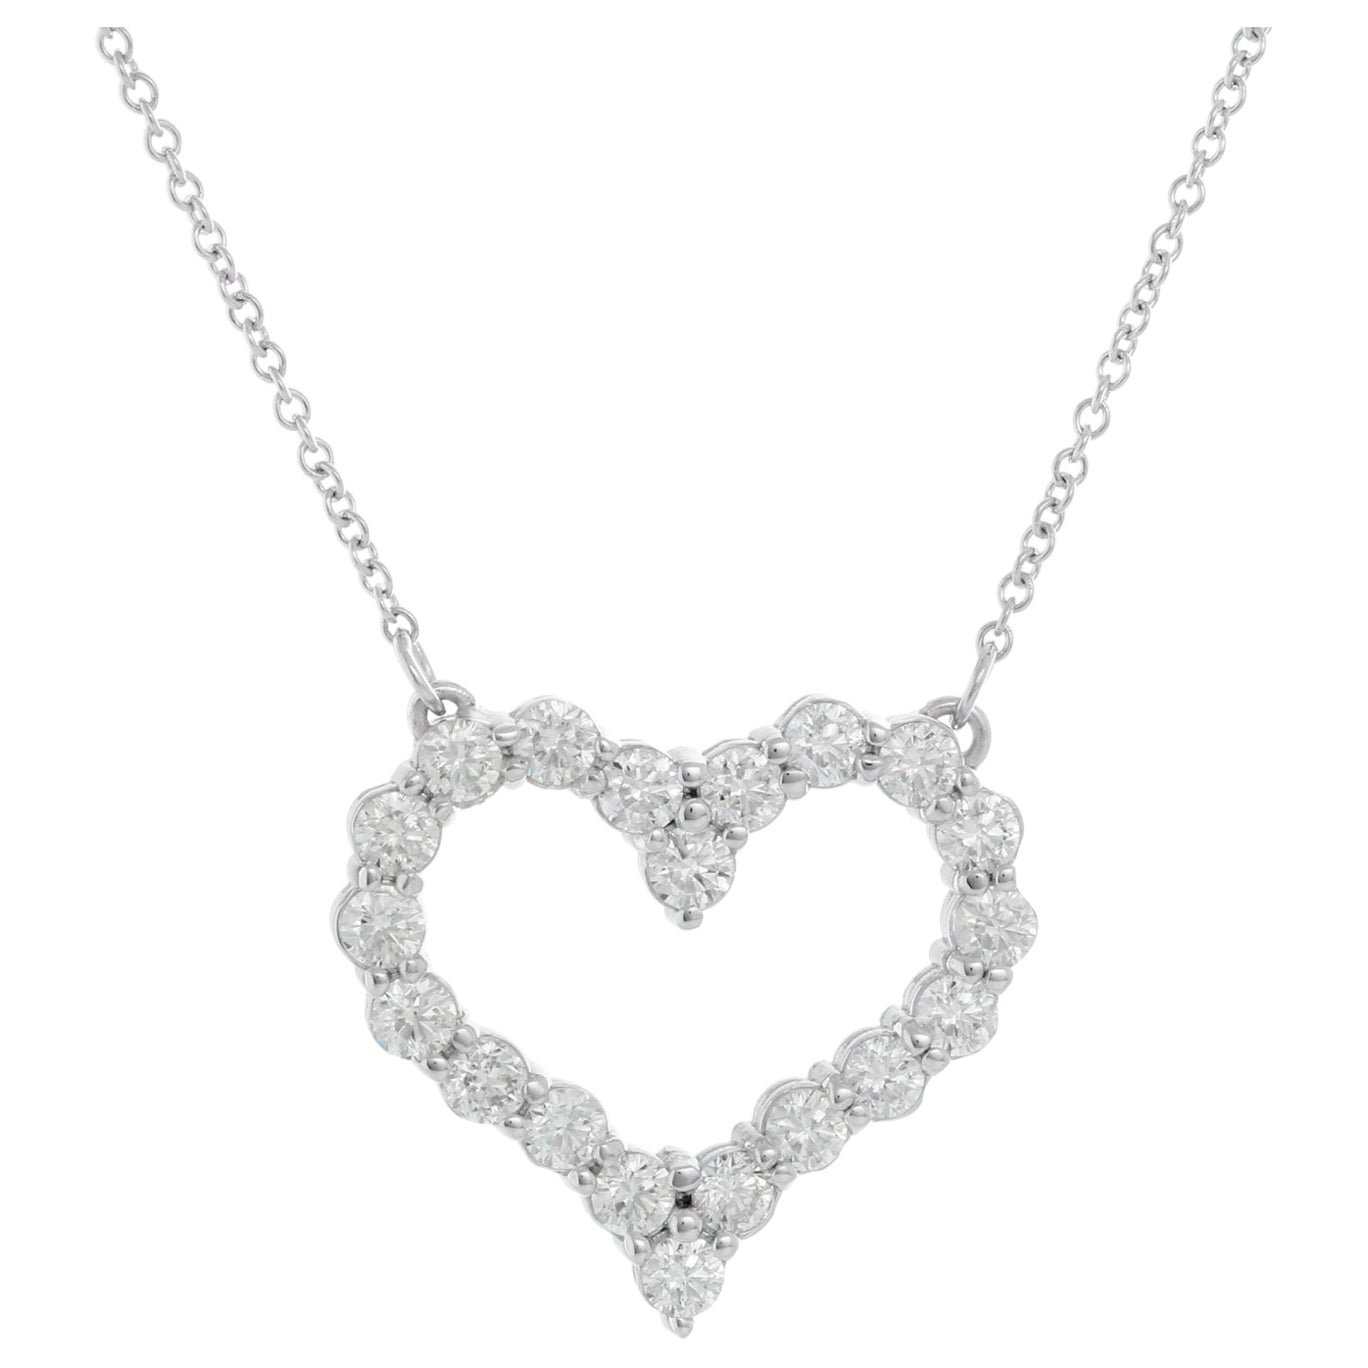 18K White Gold Diamond Heart Necklace 3.21 Cts